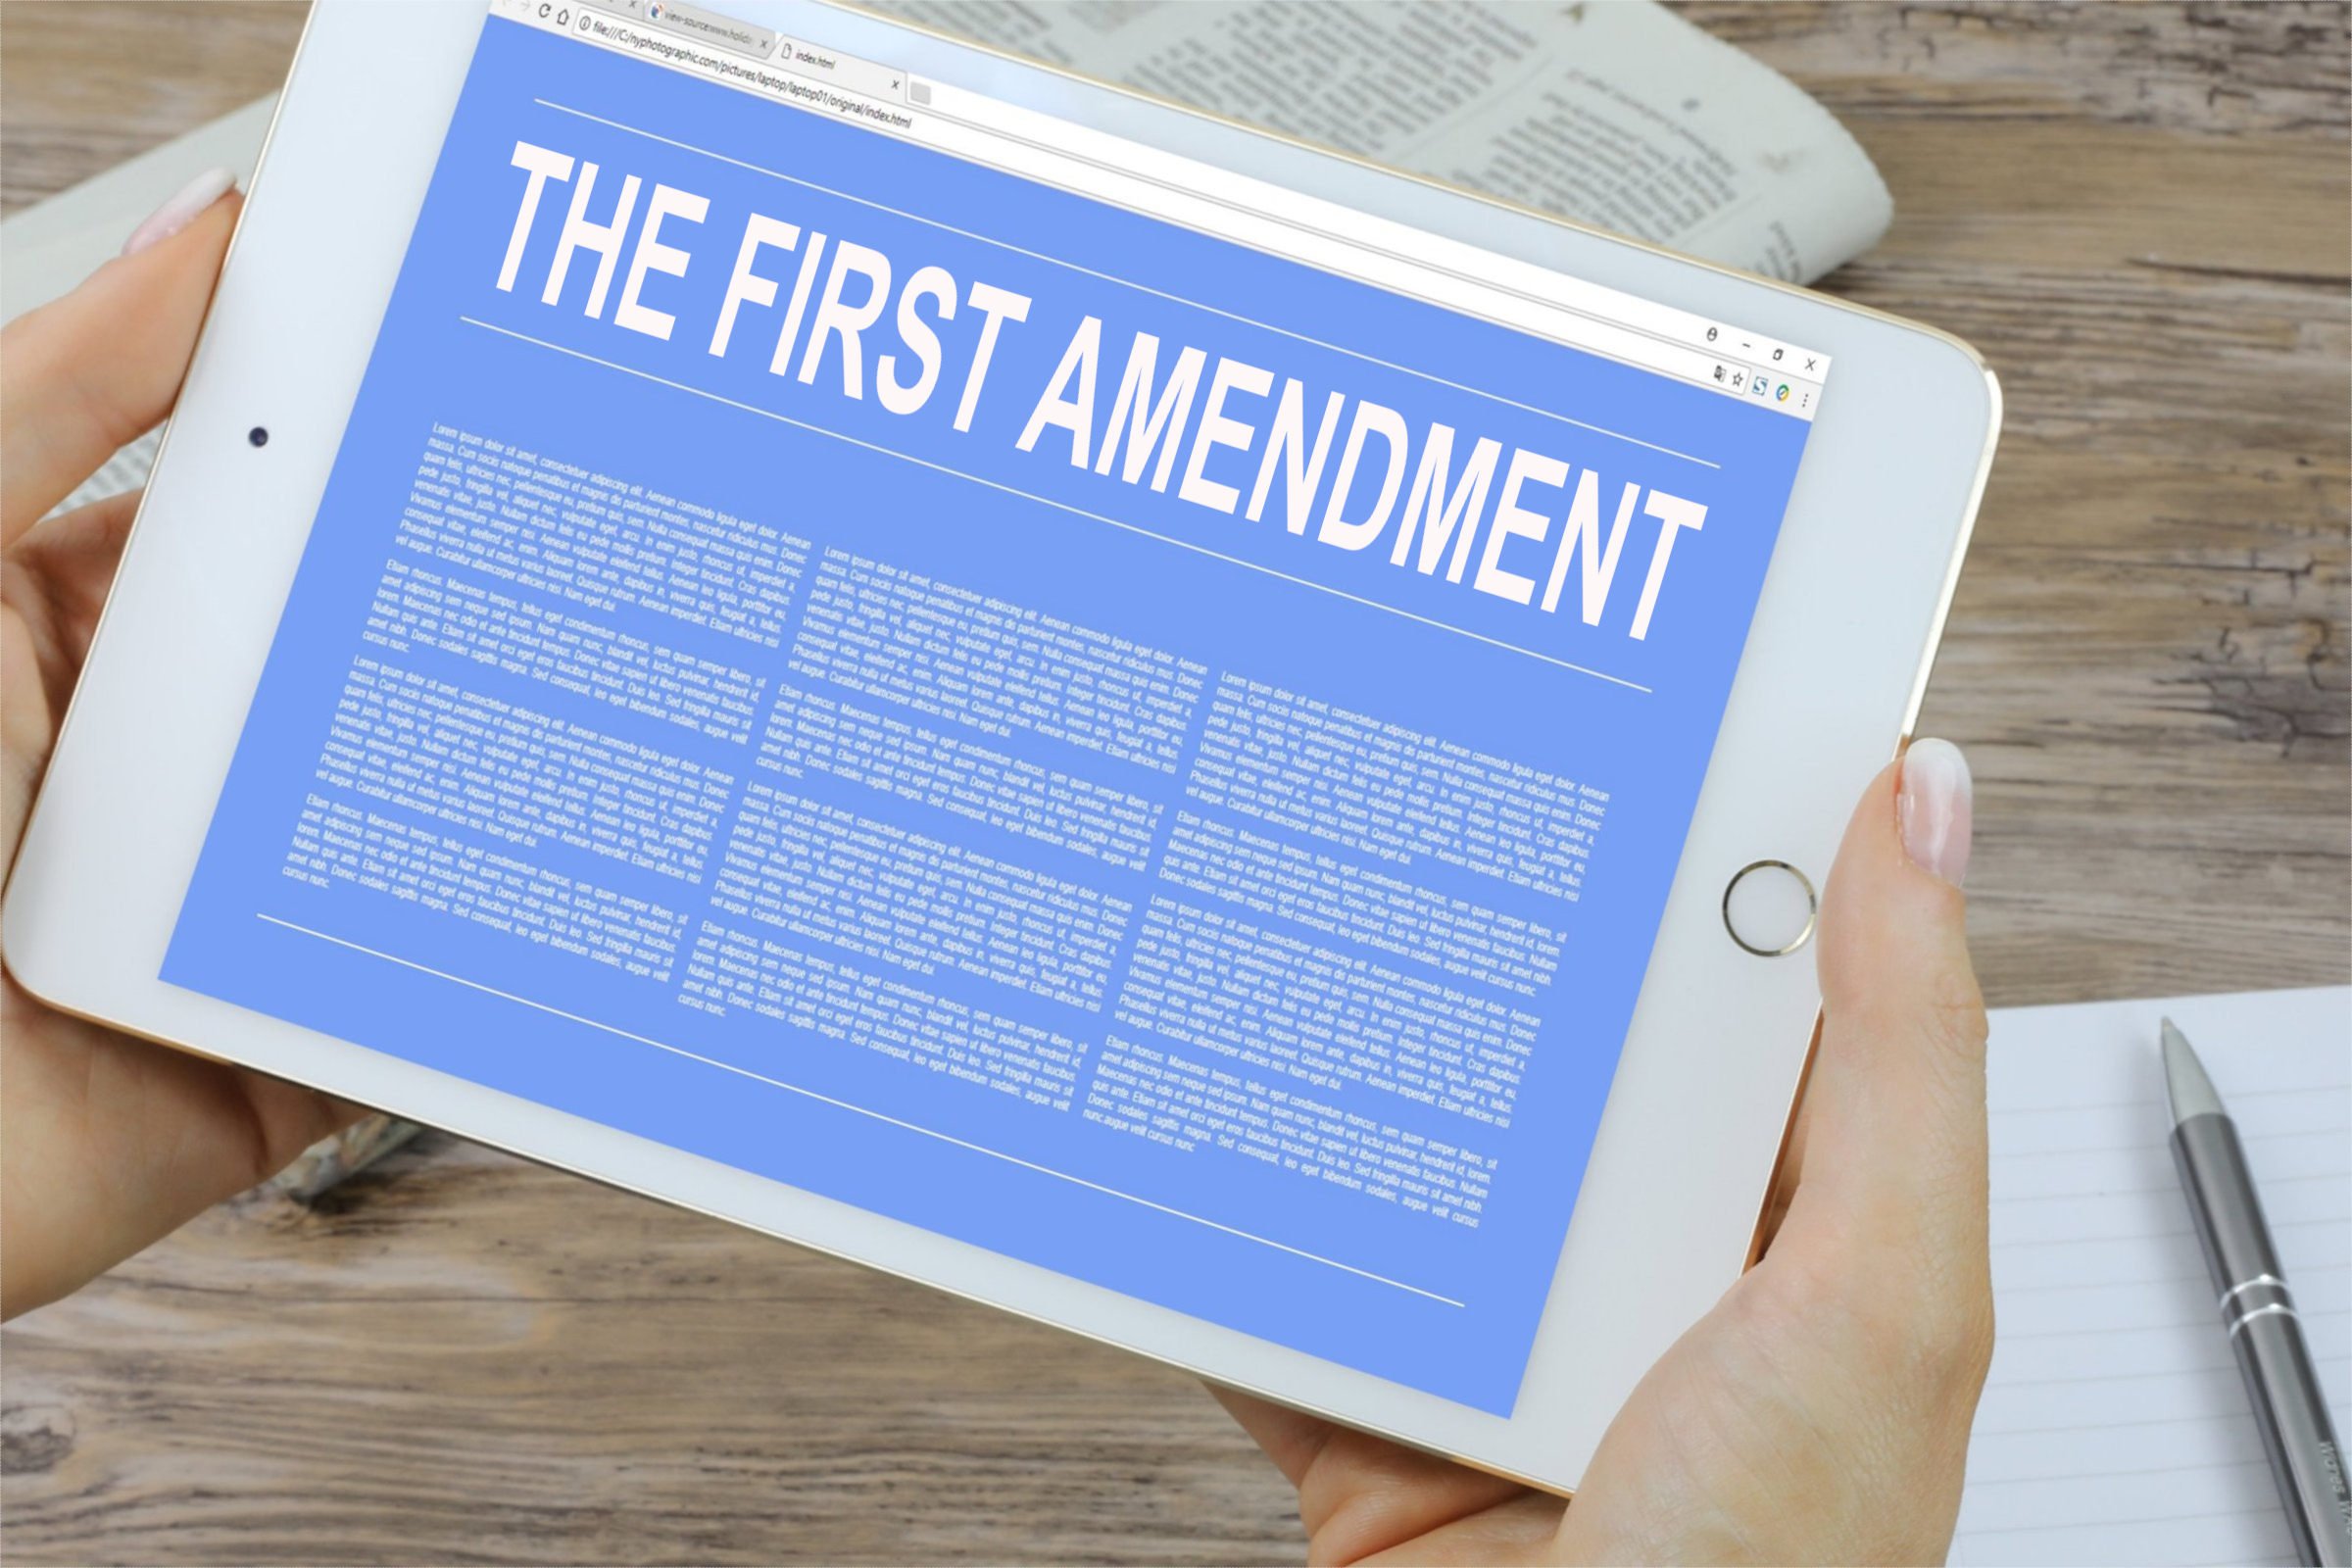 the first amendment